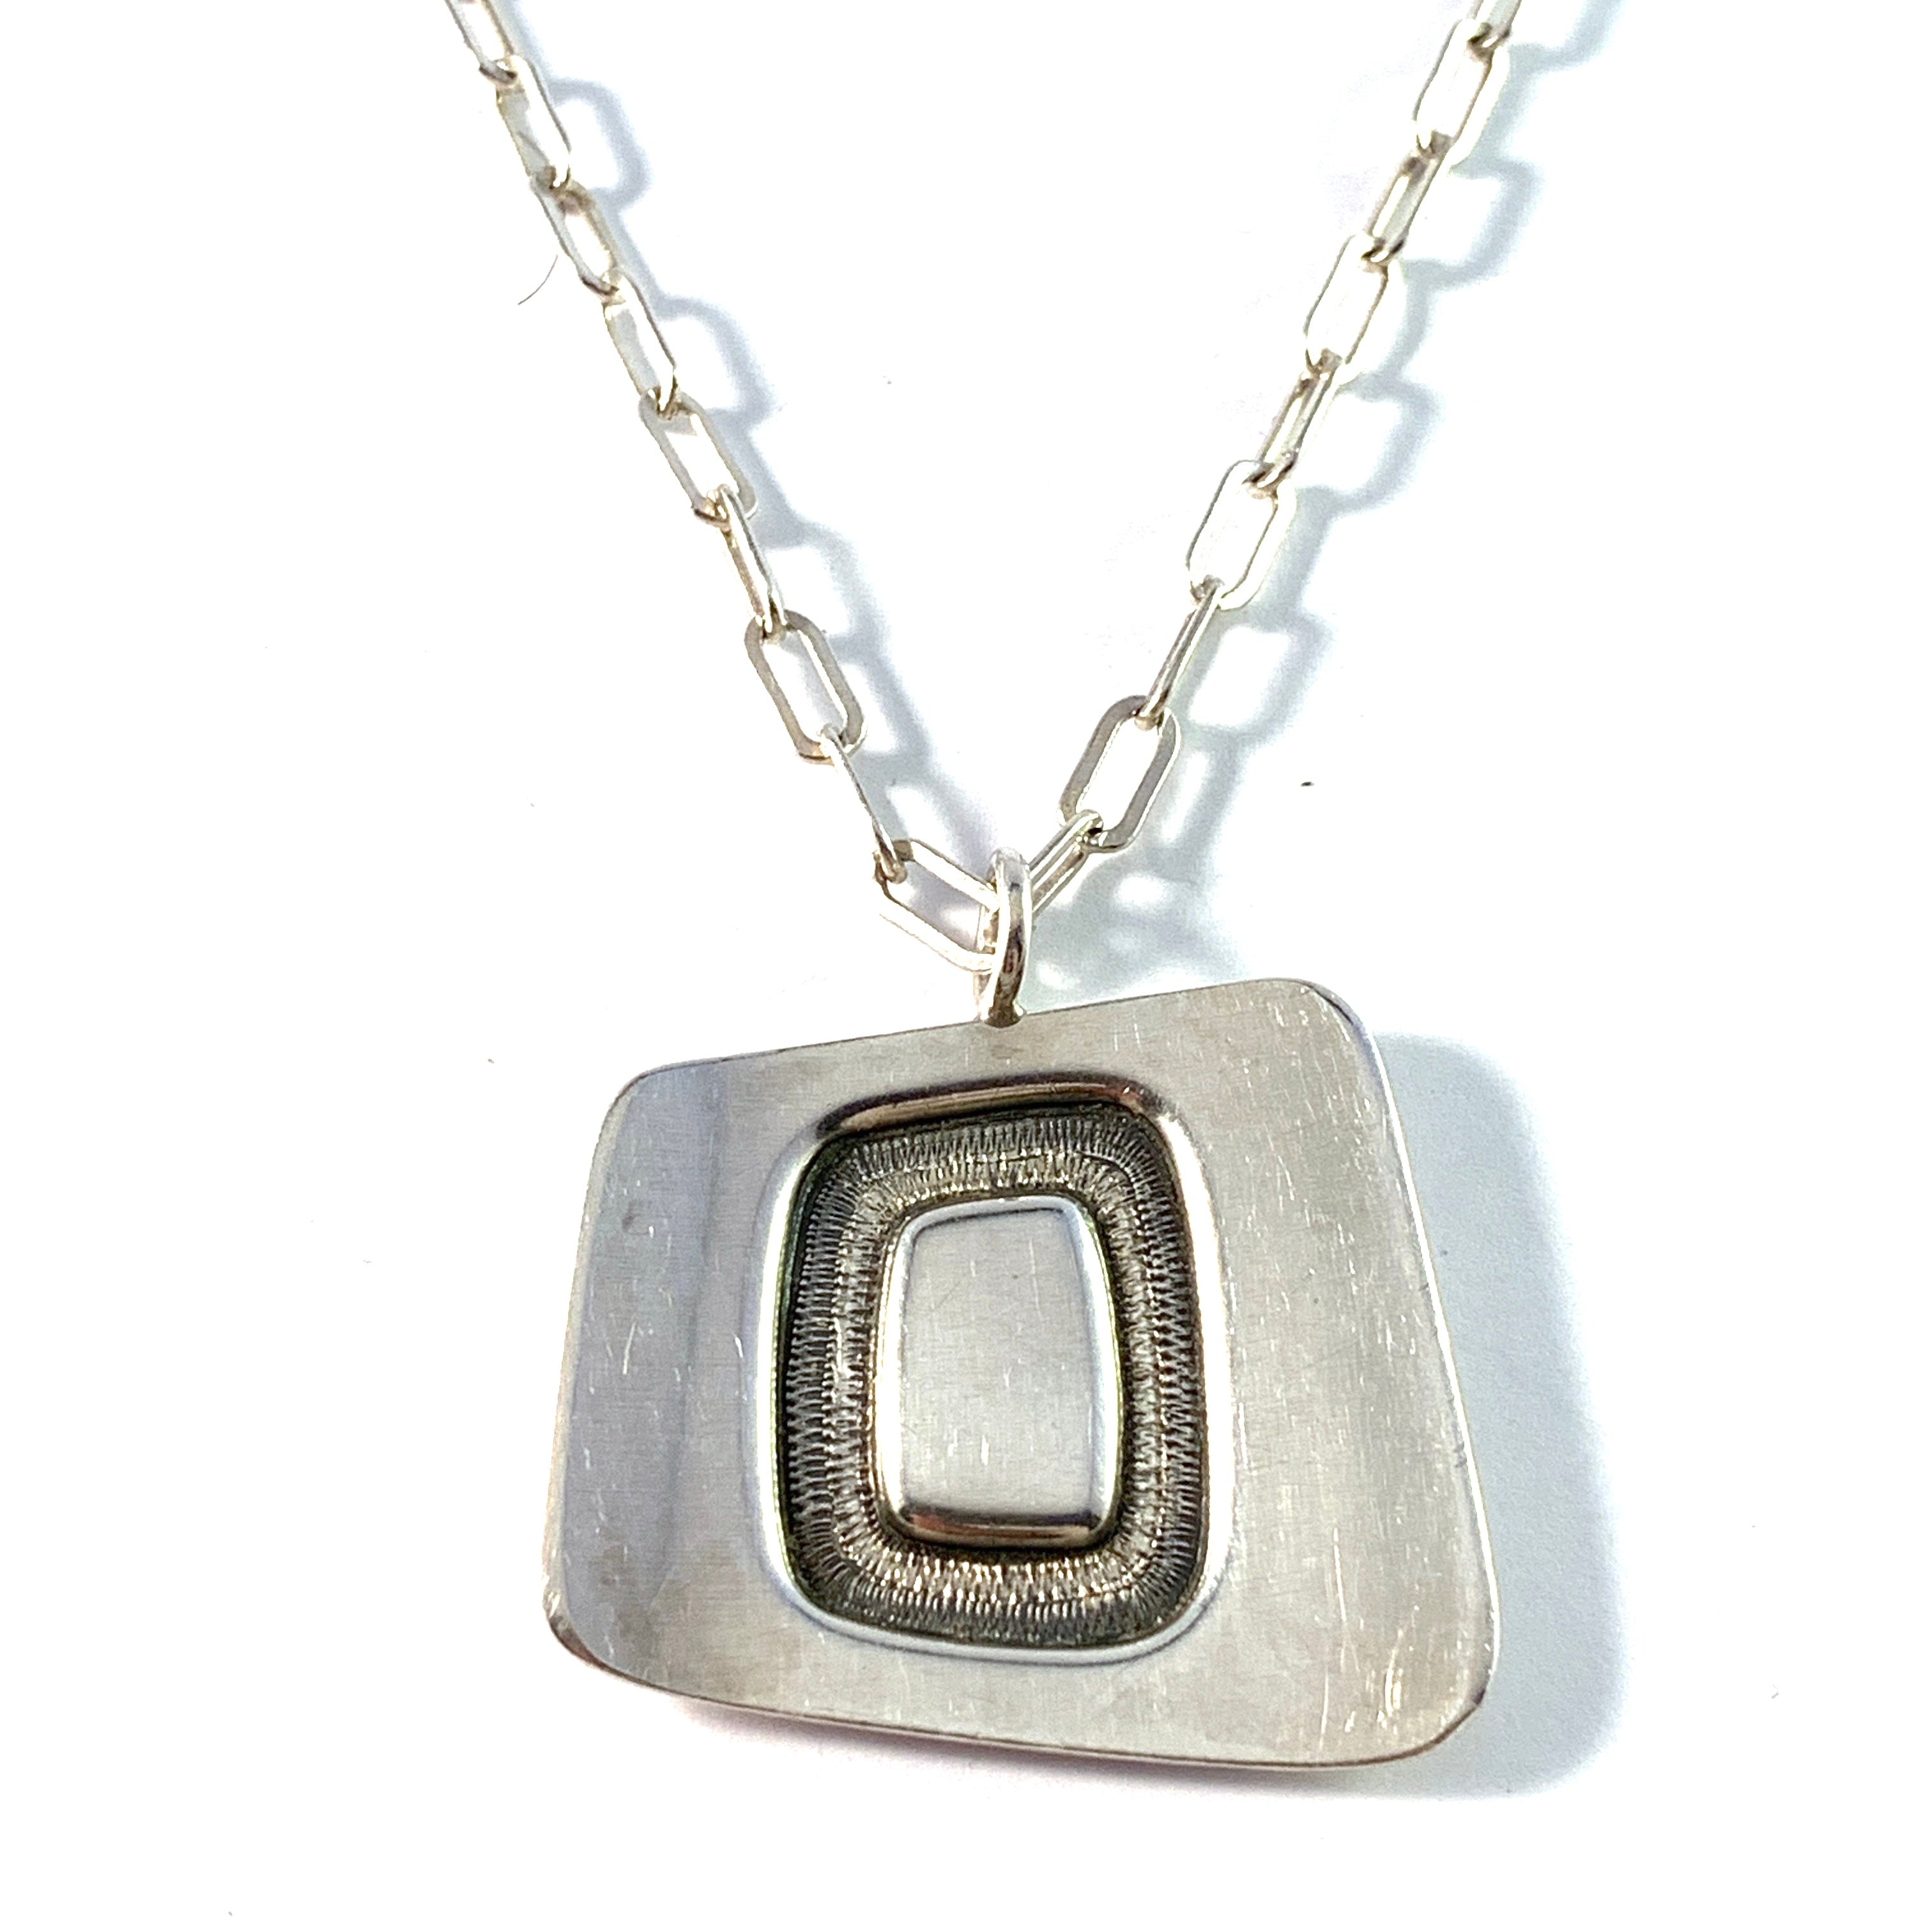 R Tennsmed, for Atelje Stigbert, Sweden year 1960, Vintage Sterling Silver Pendant Necklace.